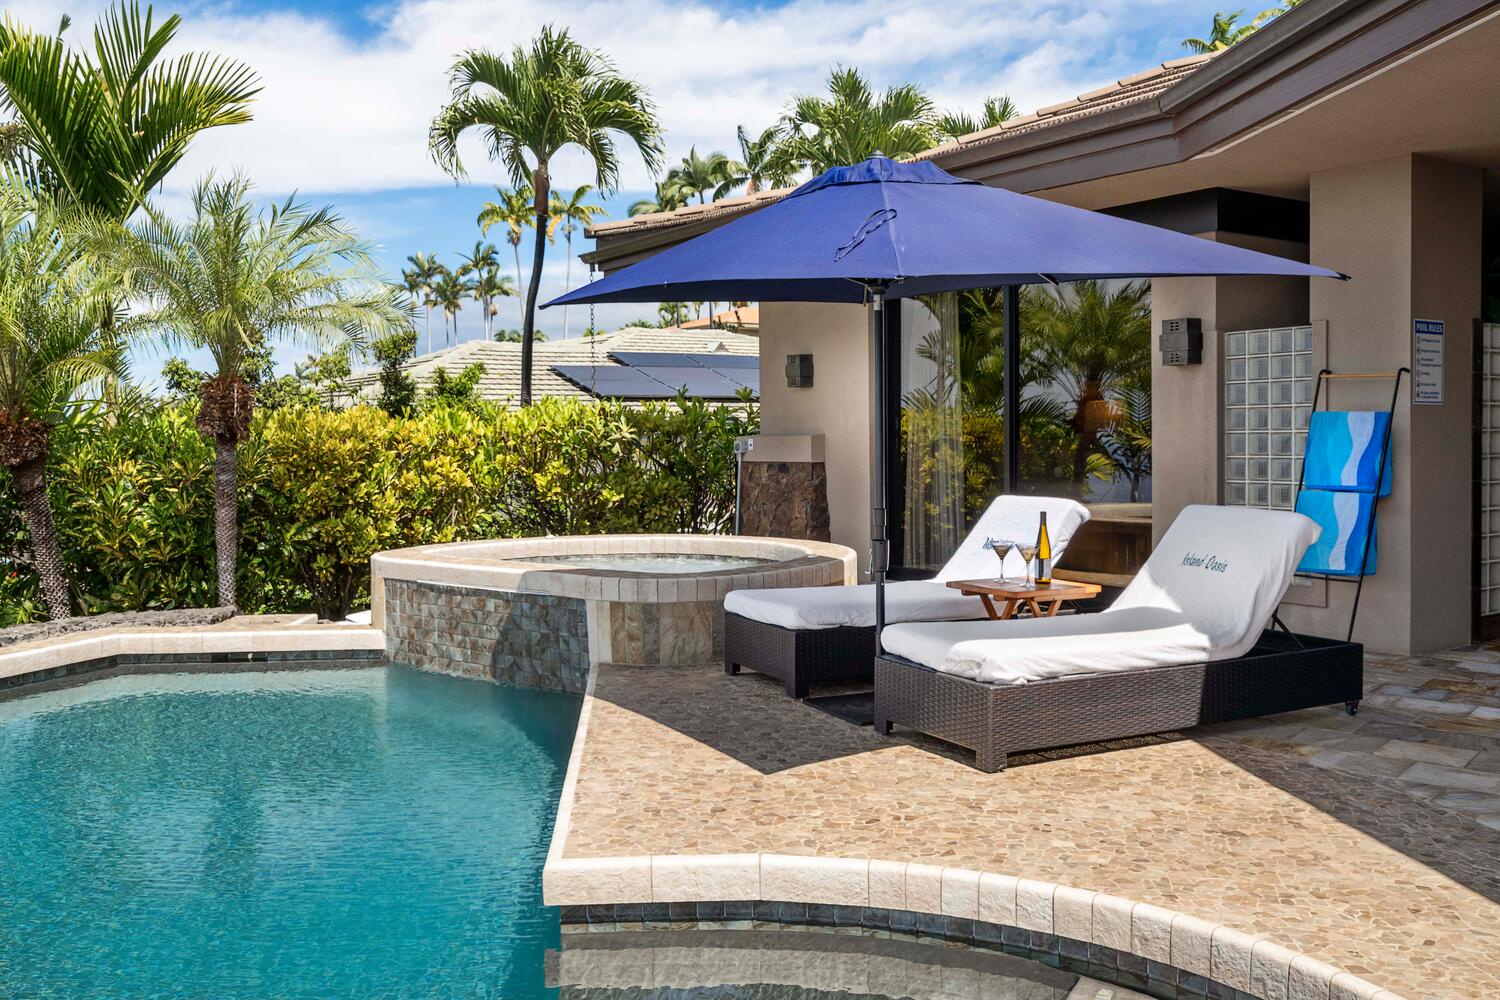 Kailua Kona Vacation Rentals, Island Oasis - Lounge outdoors to work on your tan!